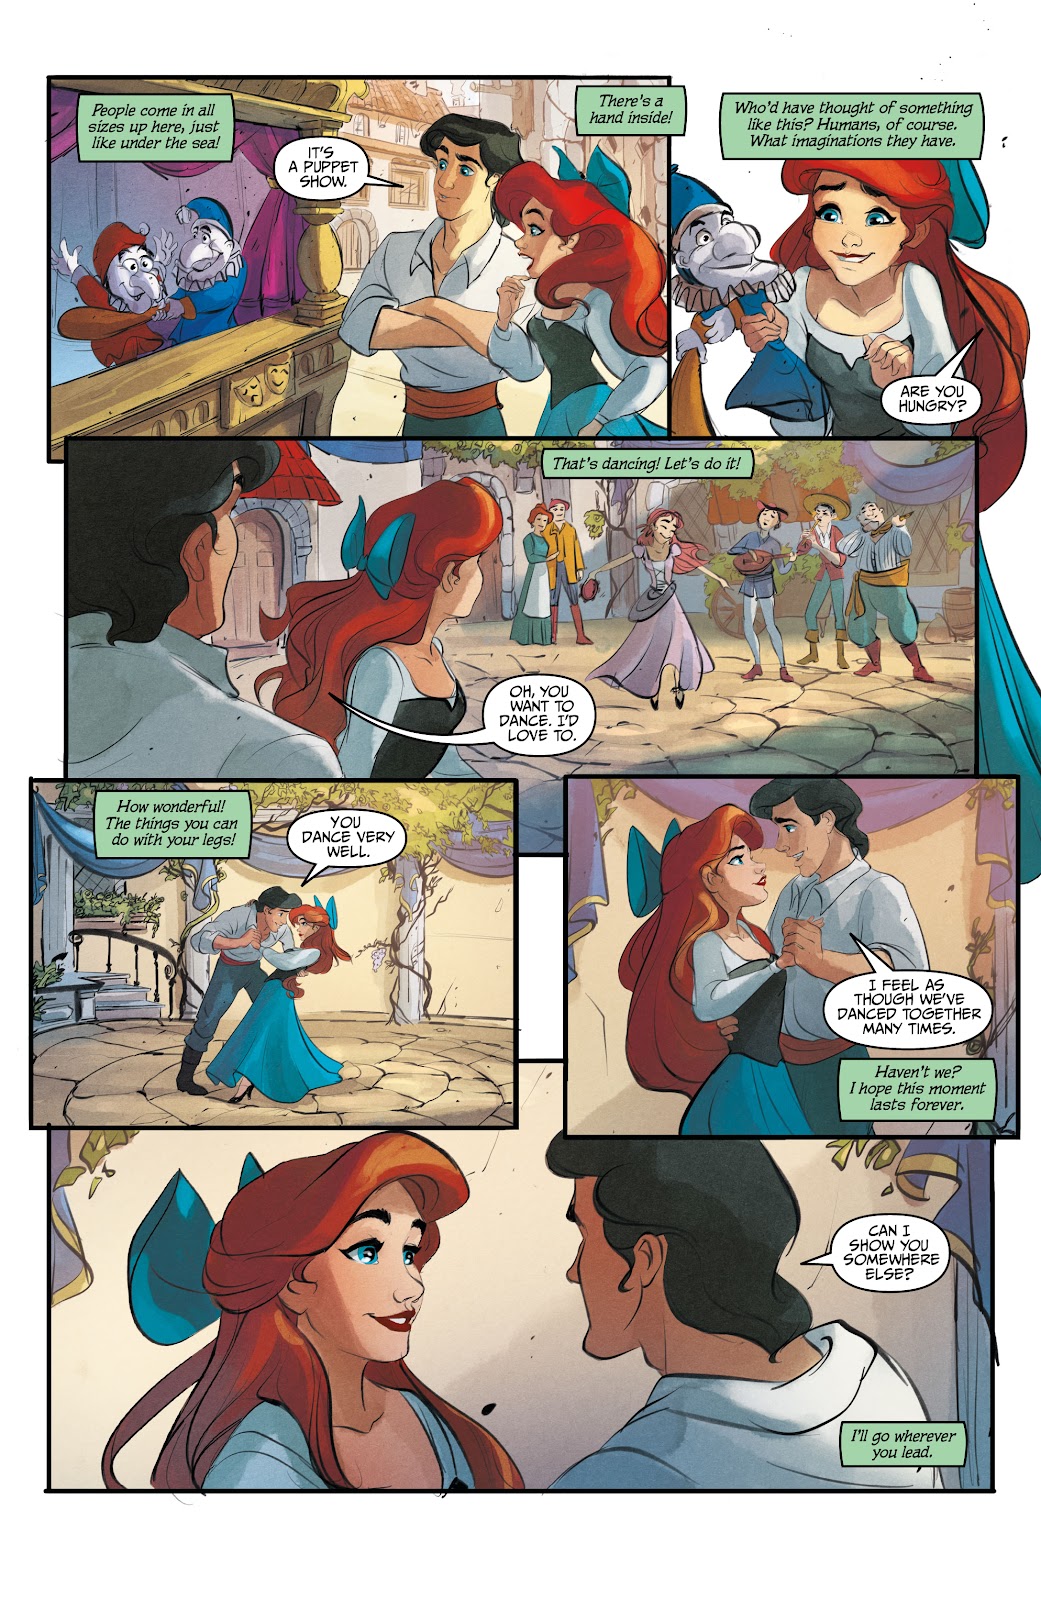 Read Online Disney The Little Mermaid Comic Issue 3